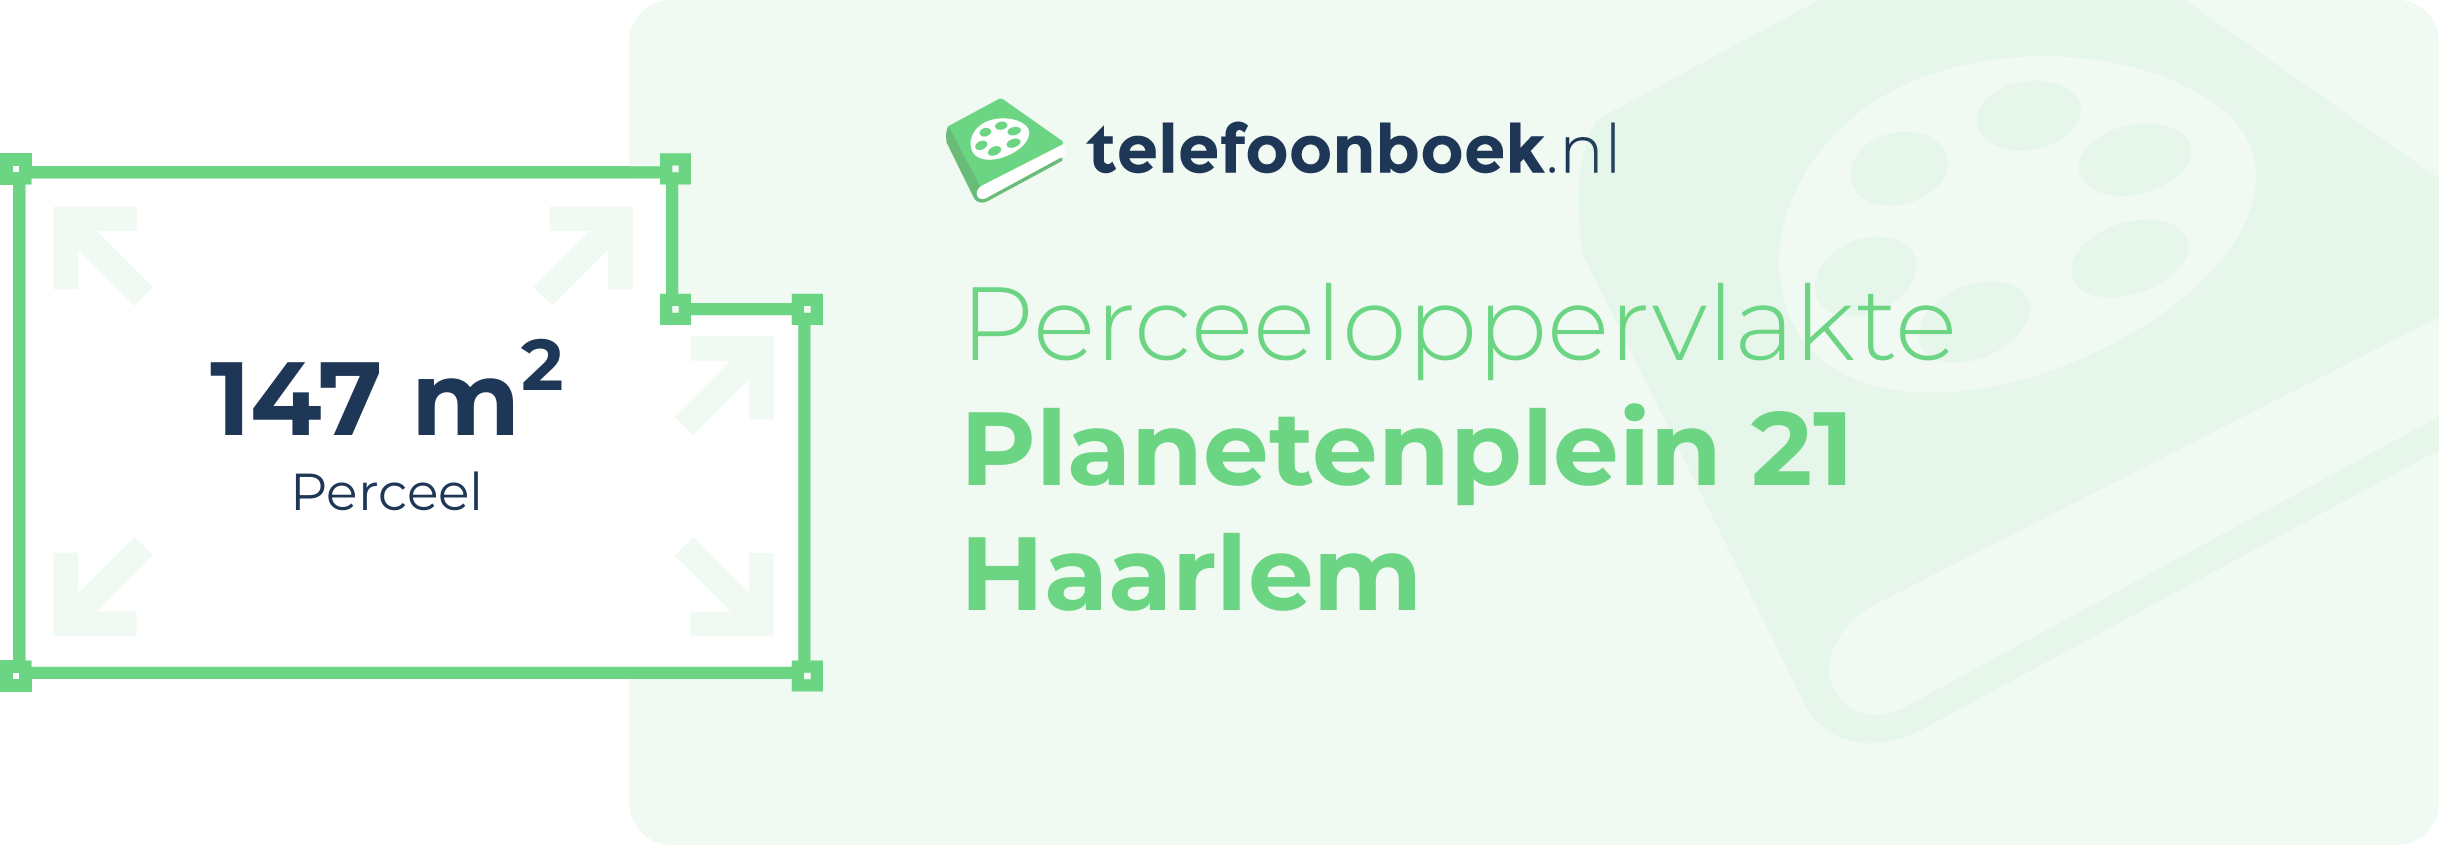 Perceeloppervlakte Planetenplein 21 Haarlem